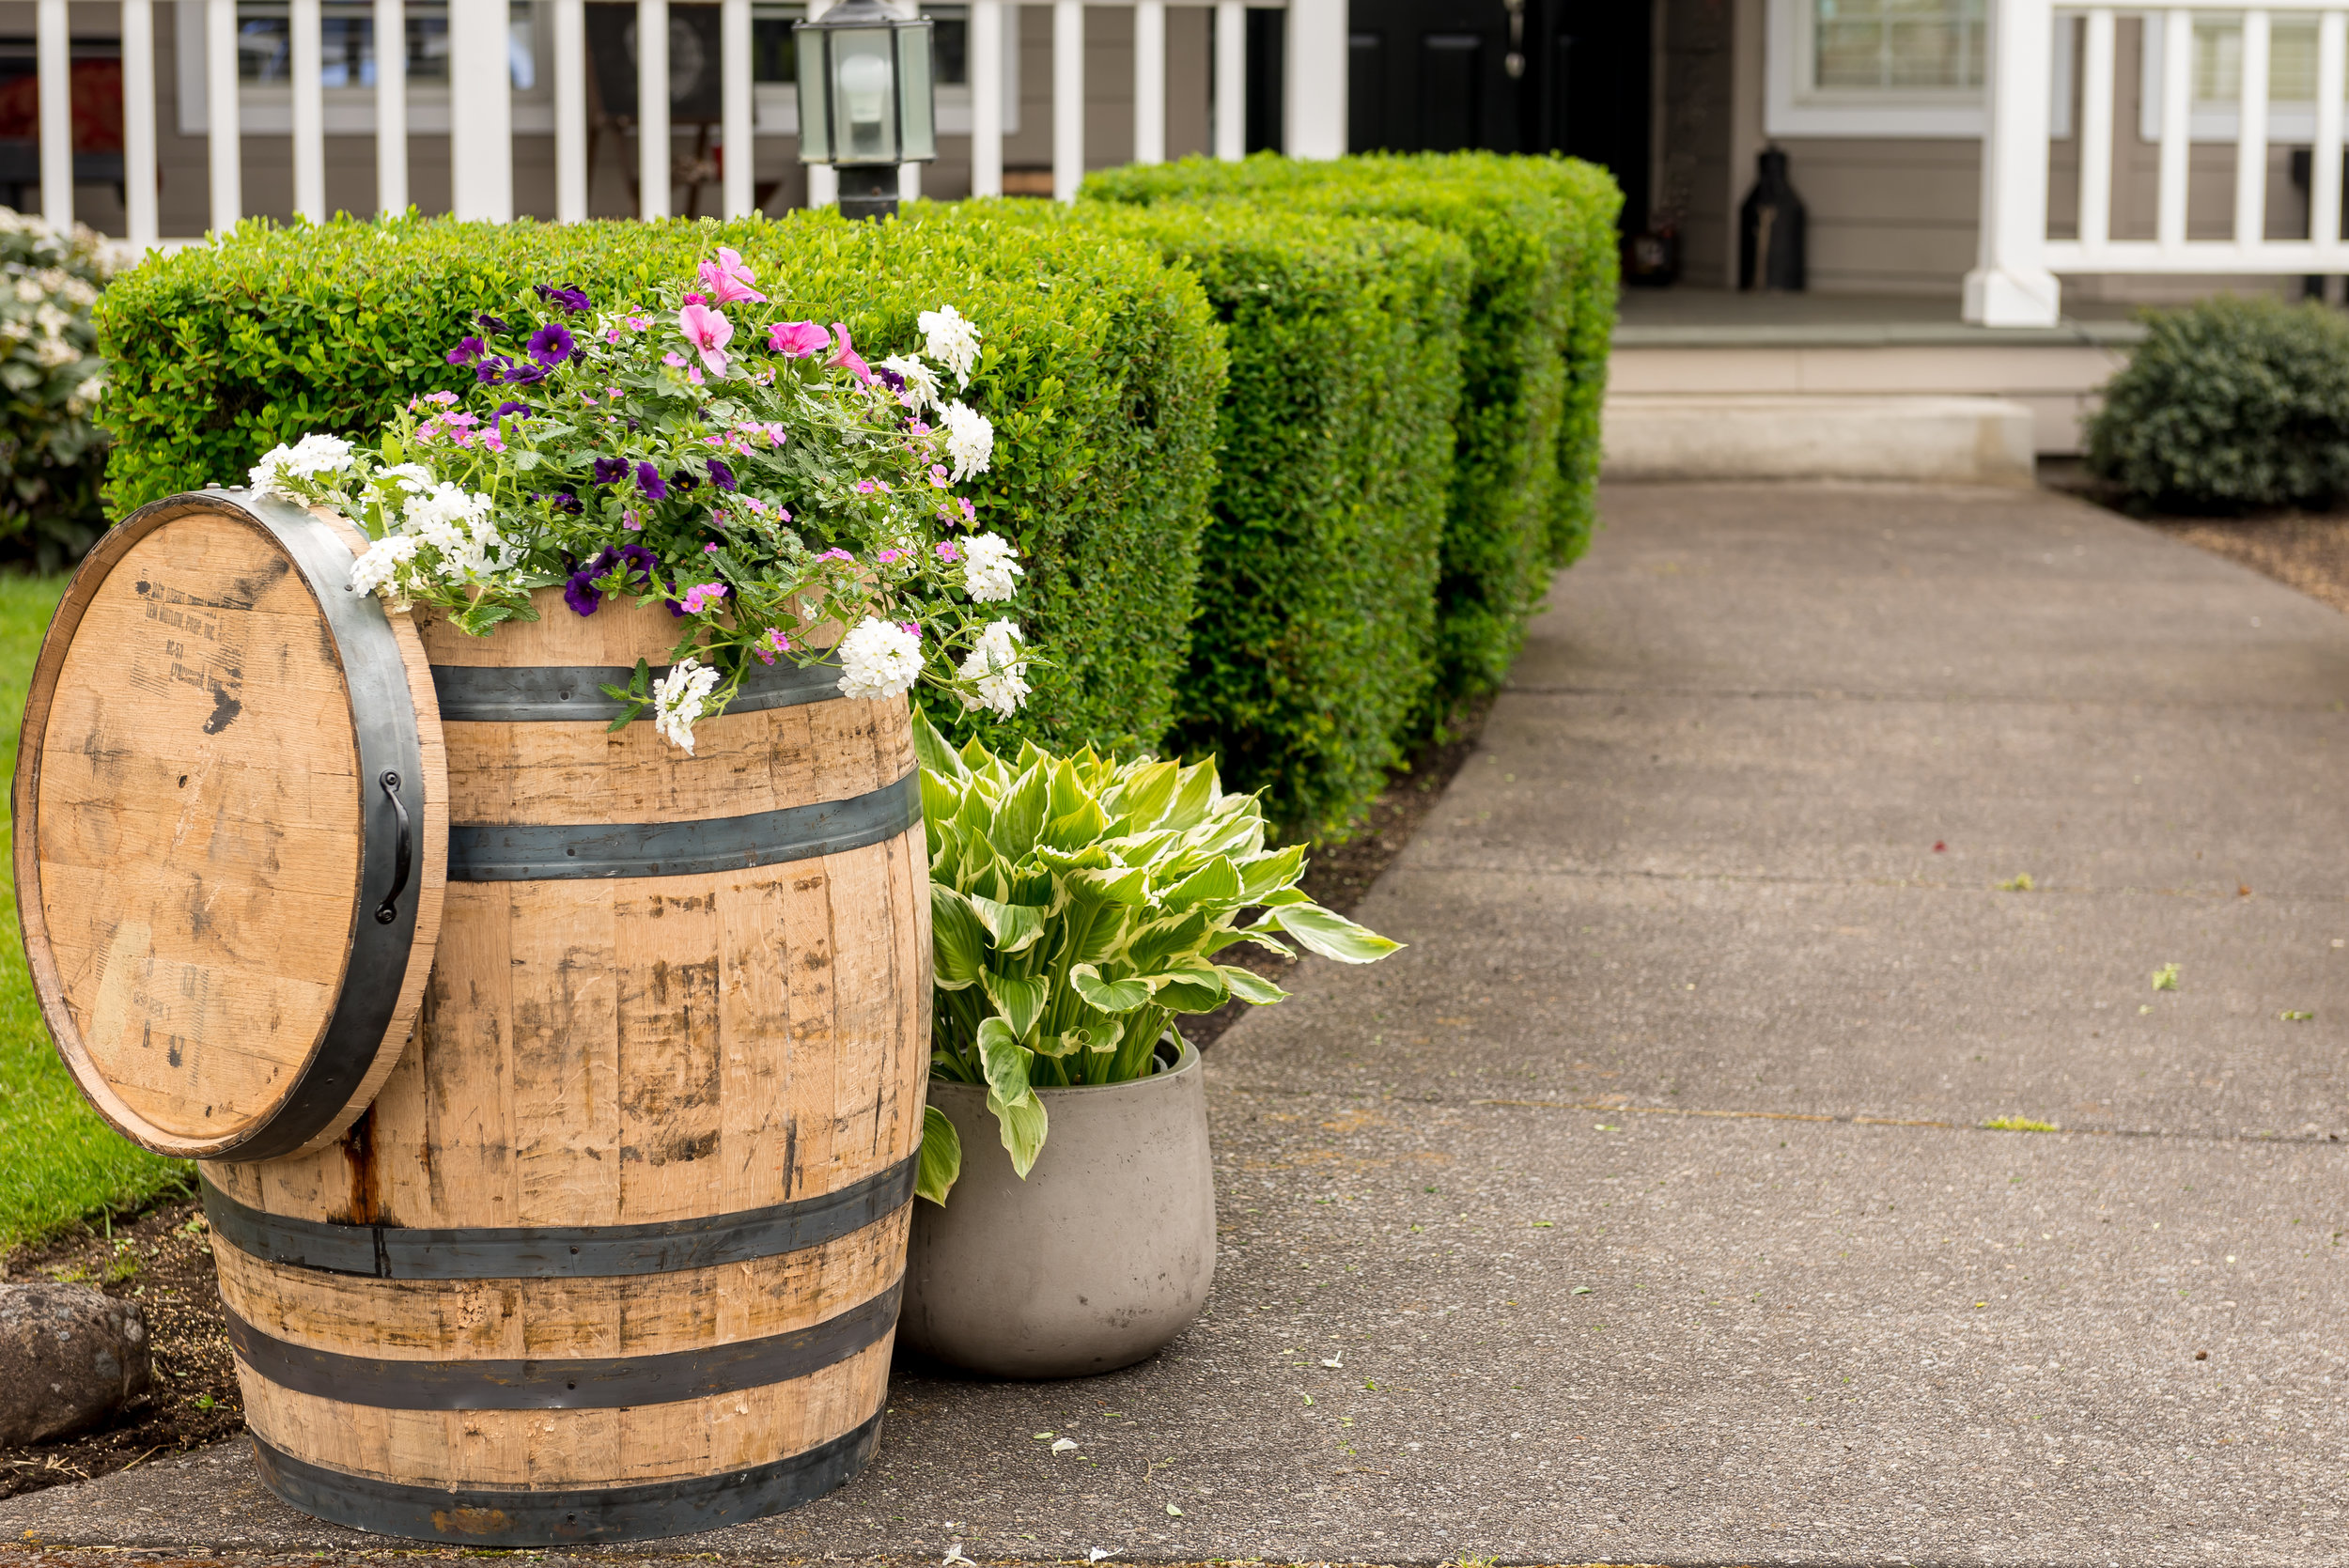  oak whiskey barrel whole dimensions 27”x36” 